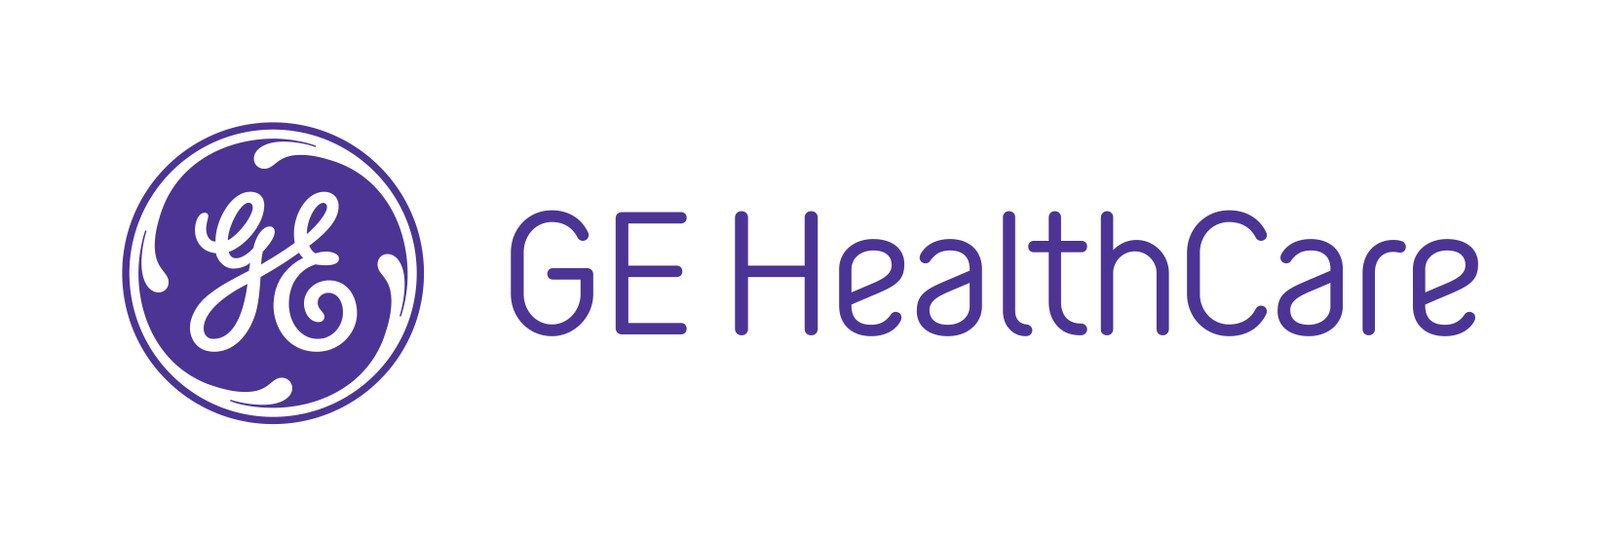 GE HealthcareNorge AS